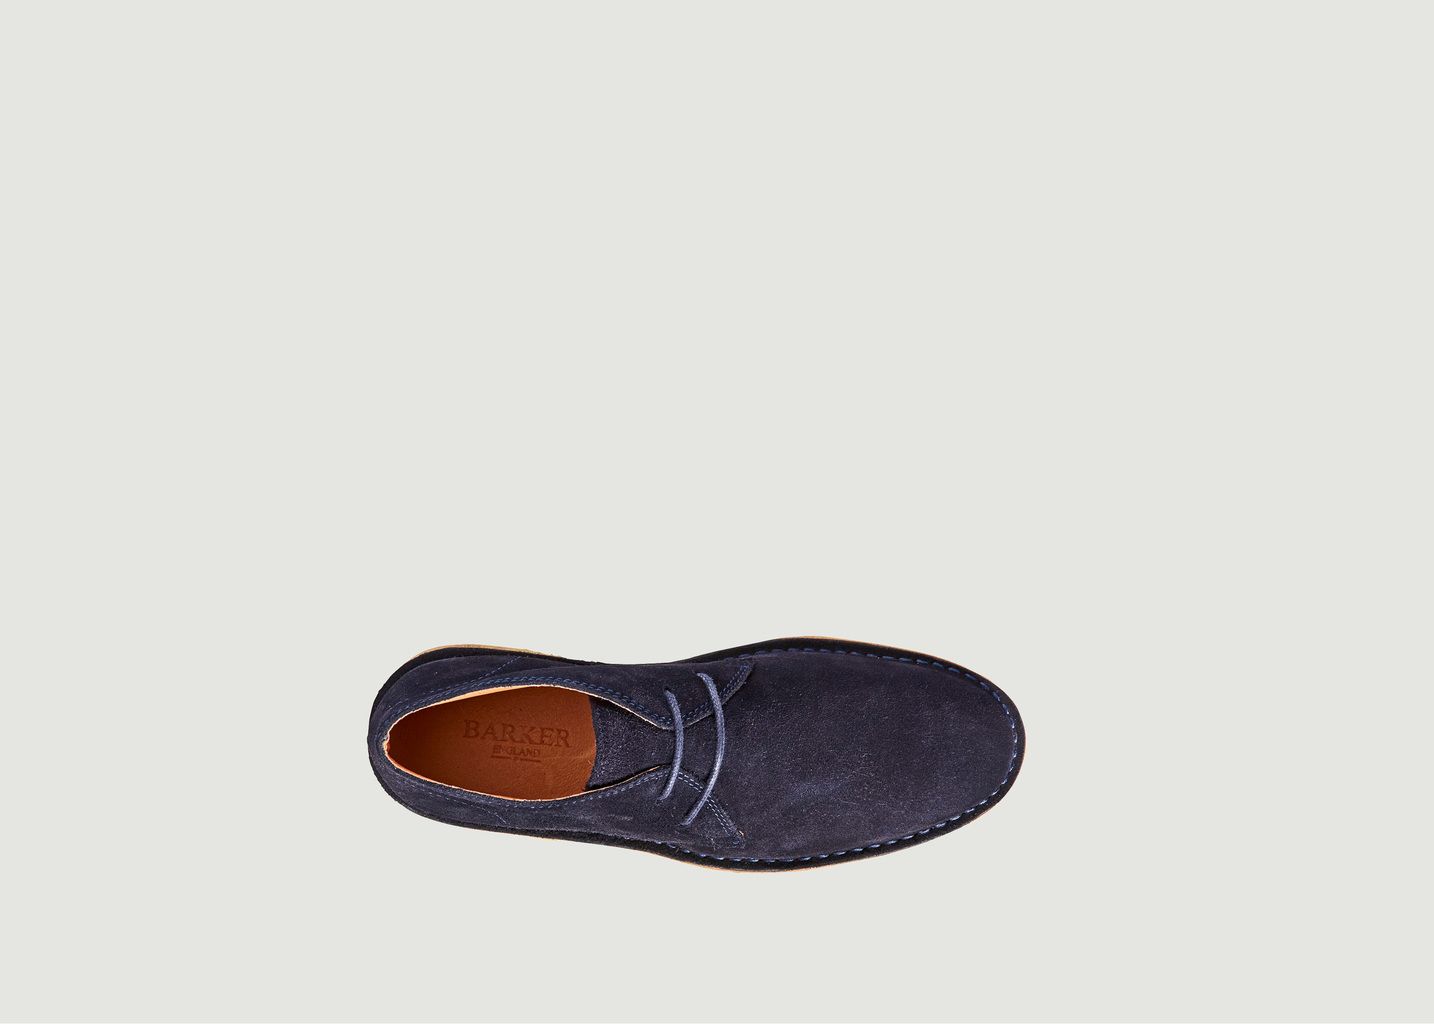 Monty Stiefel - Barker Shoes